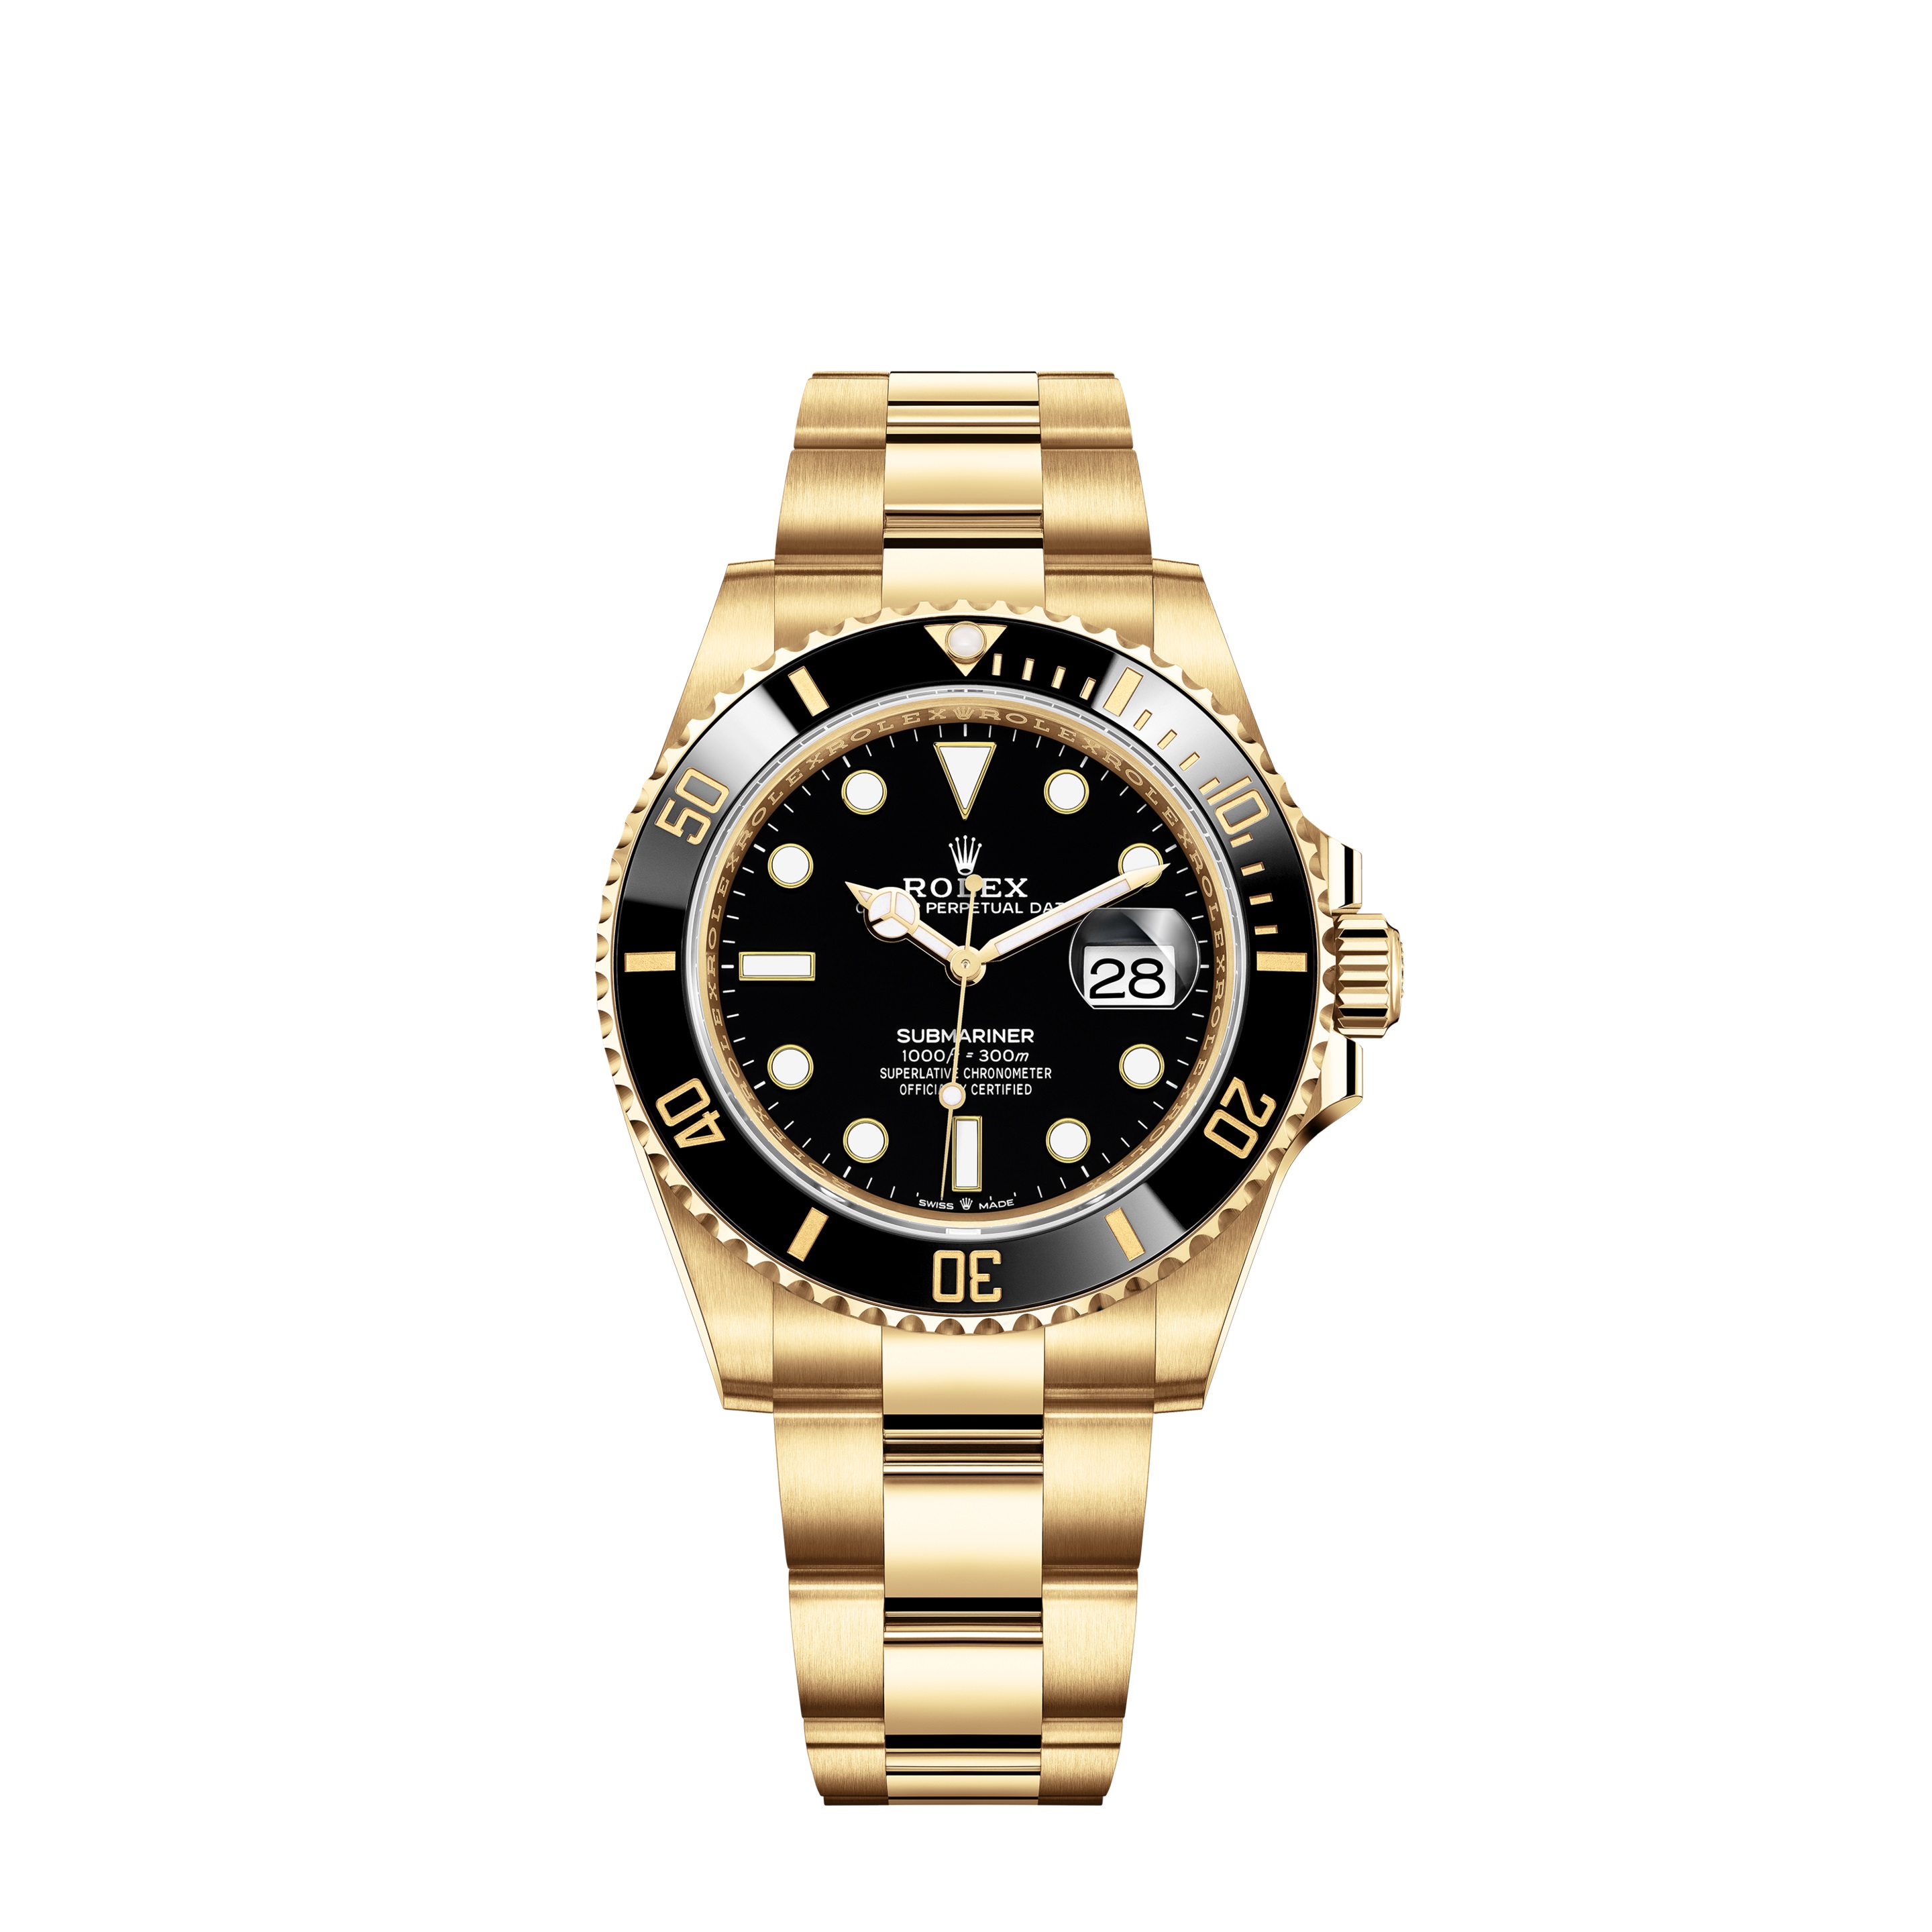 Submariner Date 126618LN Gold Watch (Black)